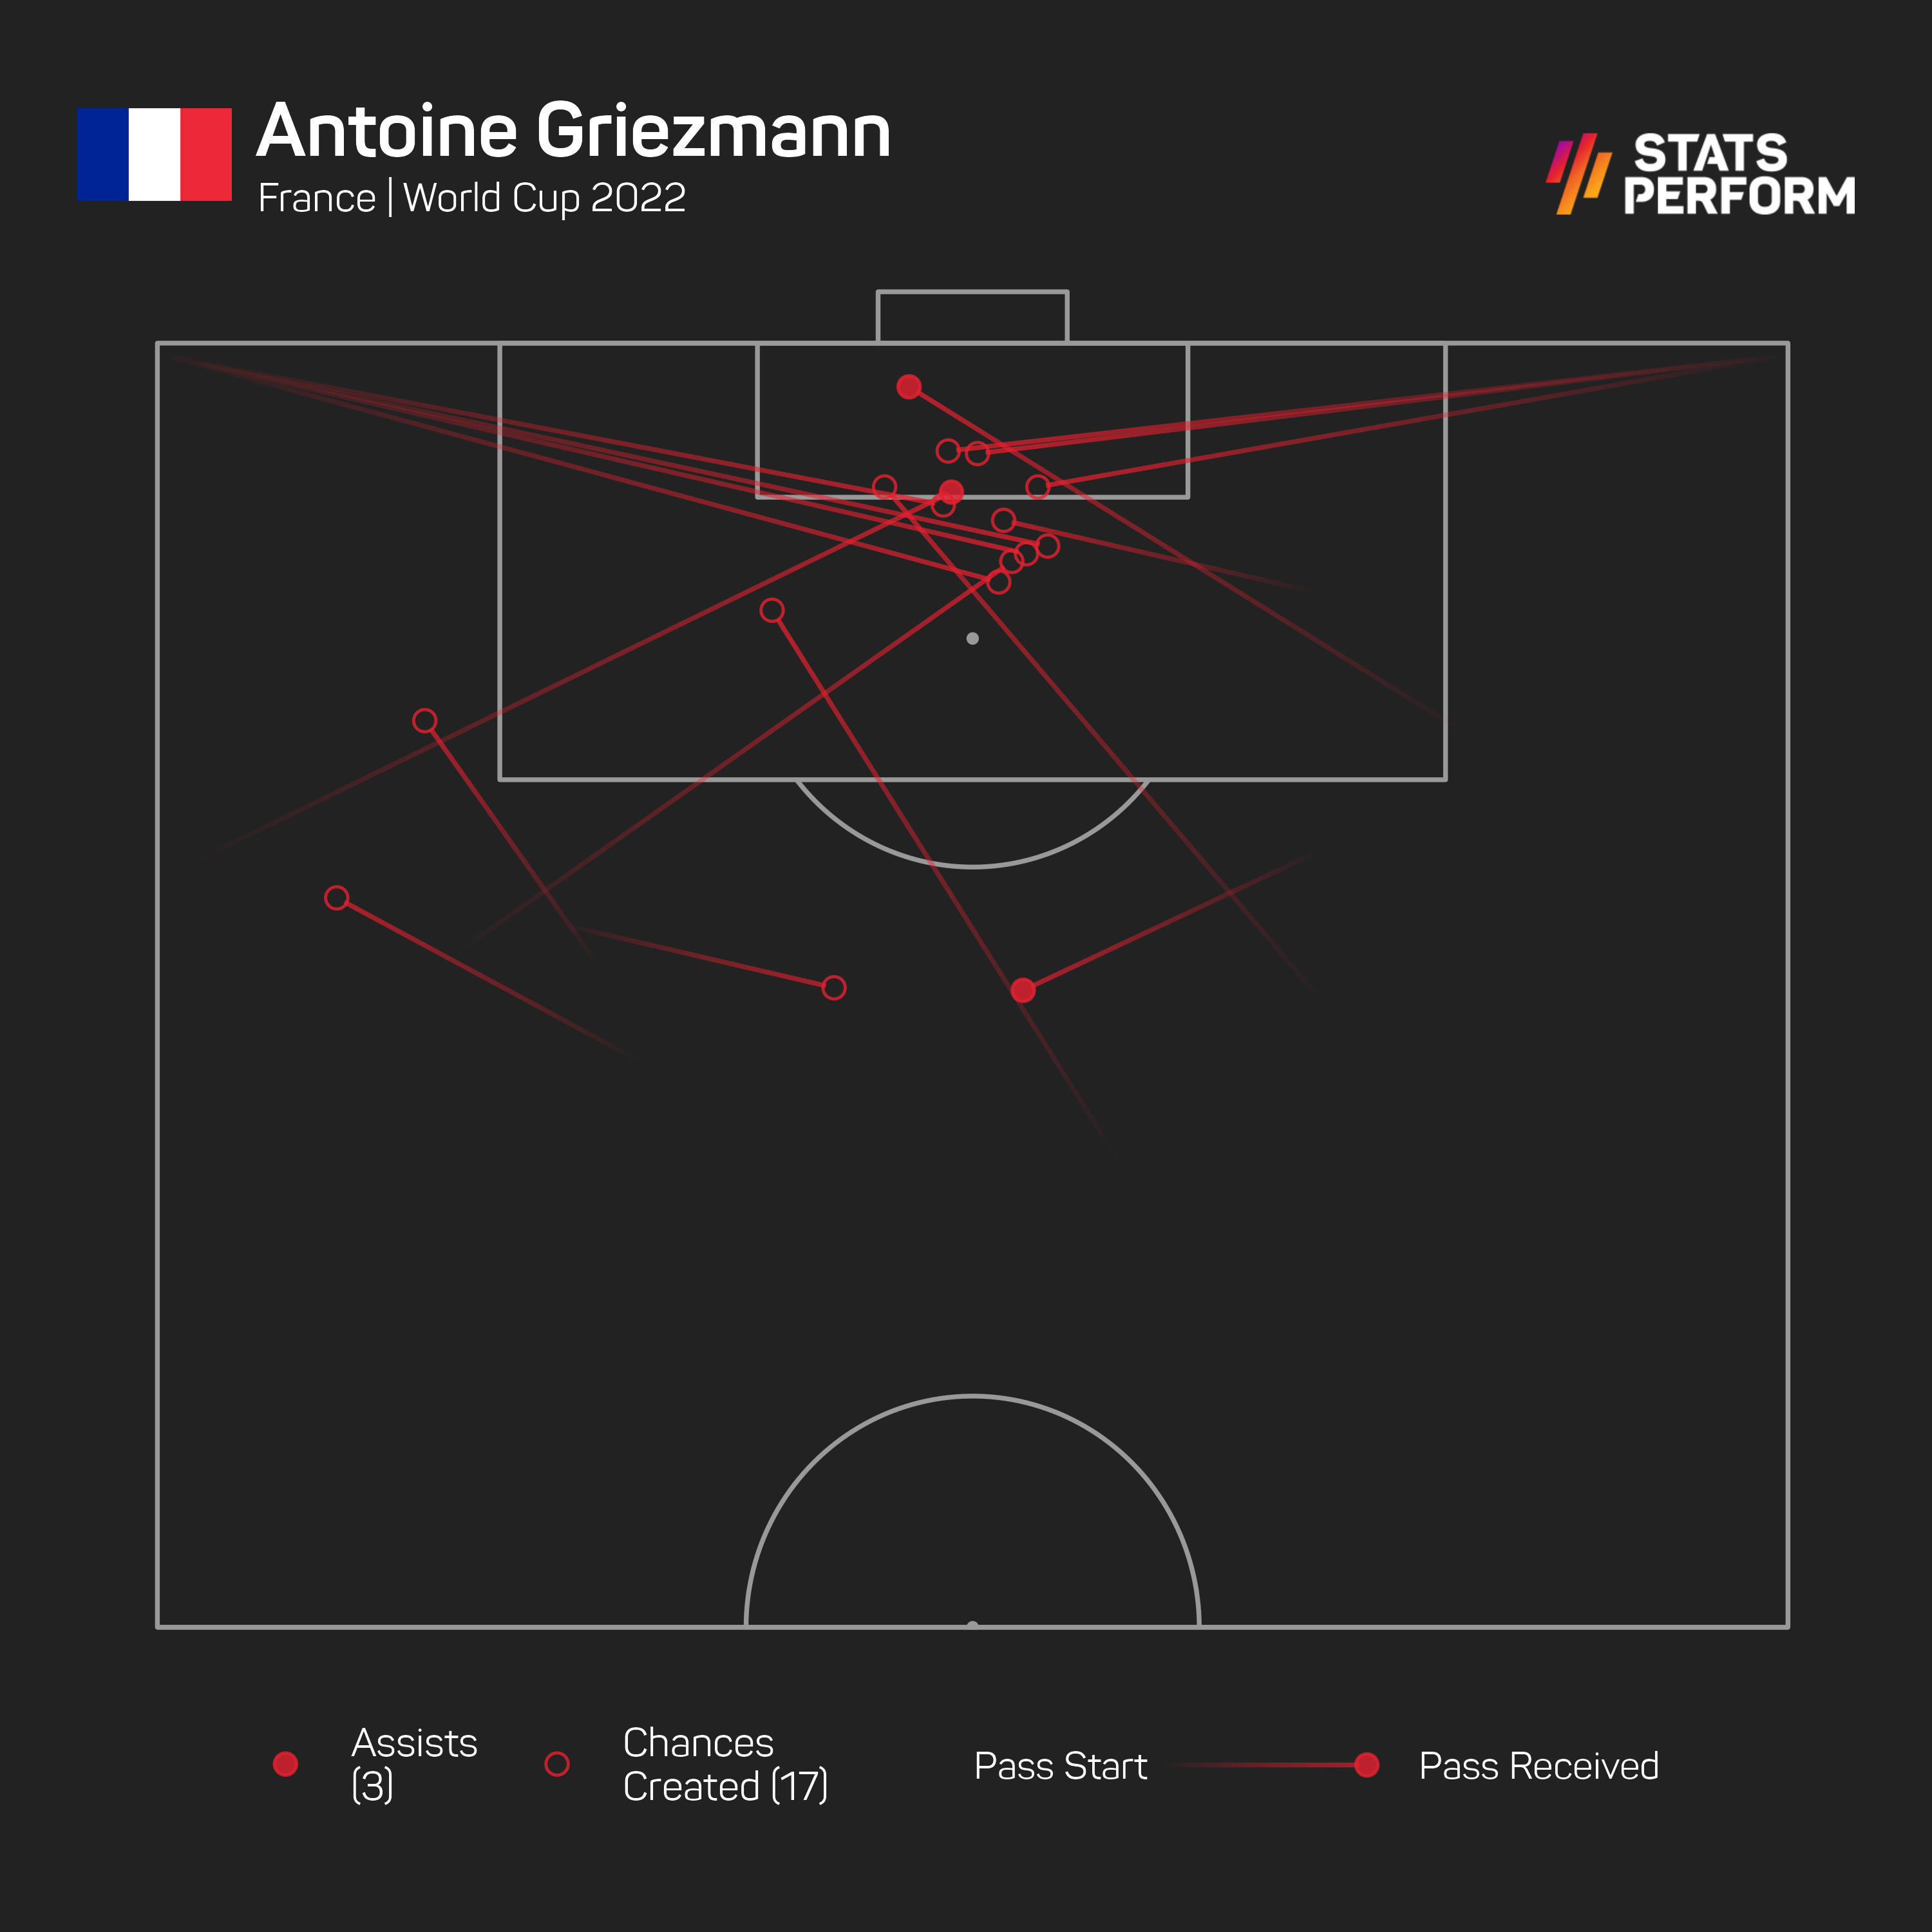 Antoine Griezmann has created 17 chances at Qatar 2022